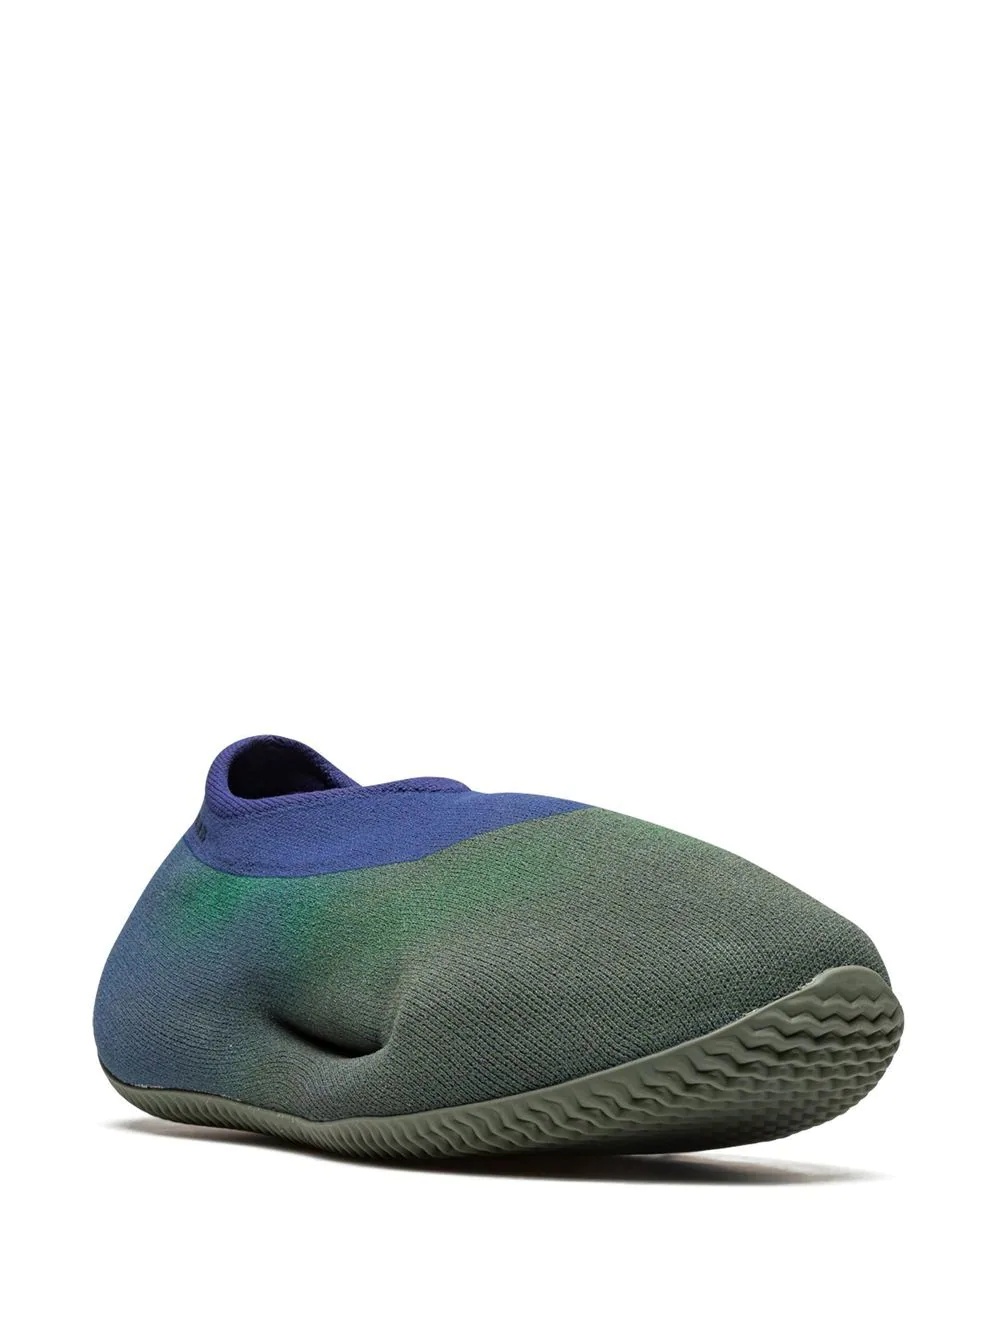 YEEZY Knit Runner "Faded Azure" sneakers - 2